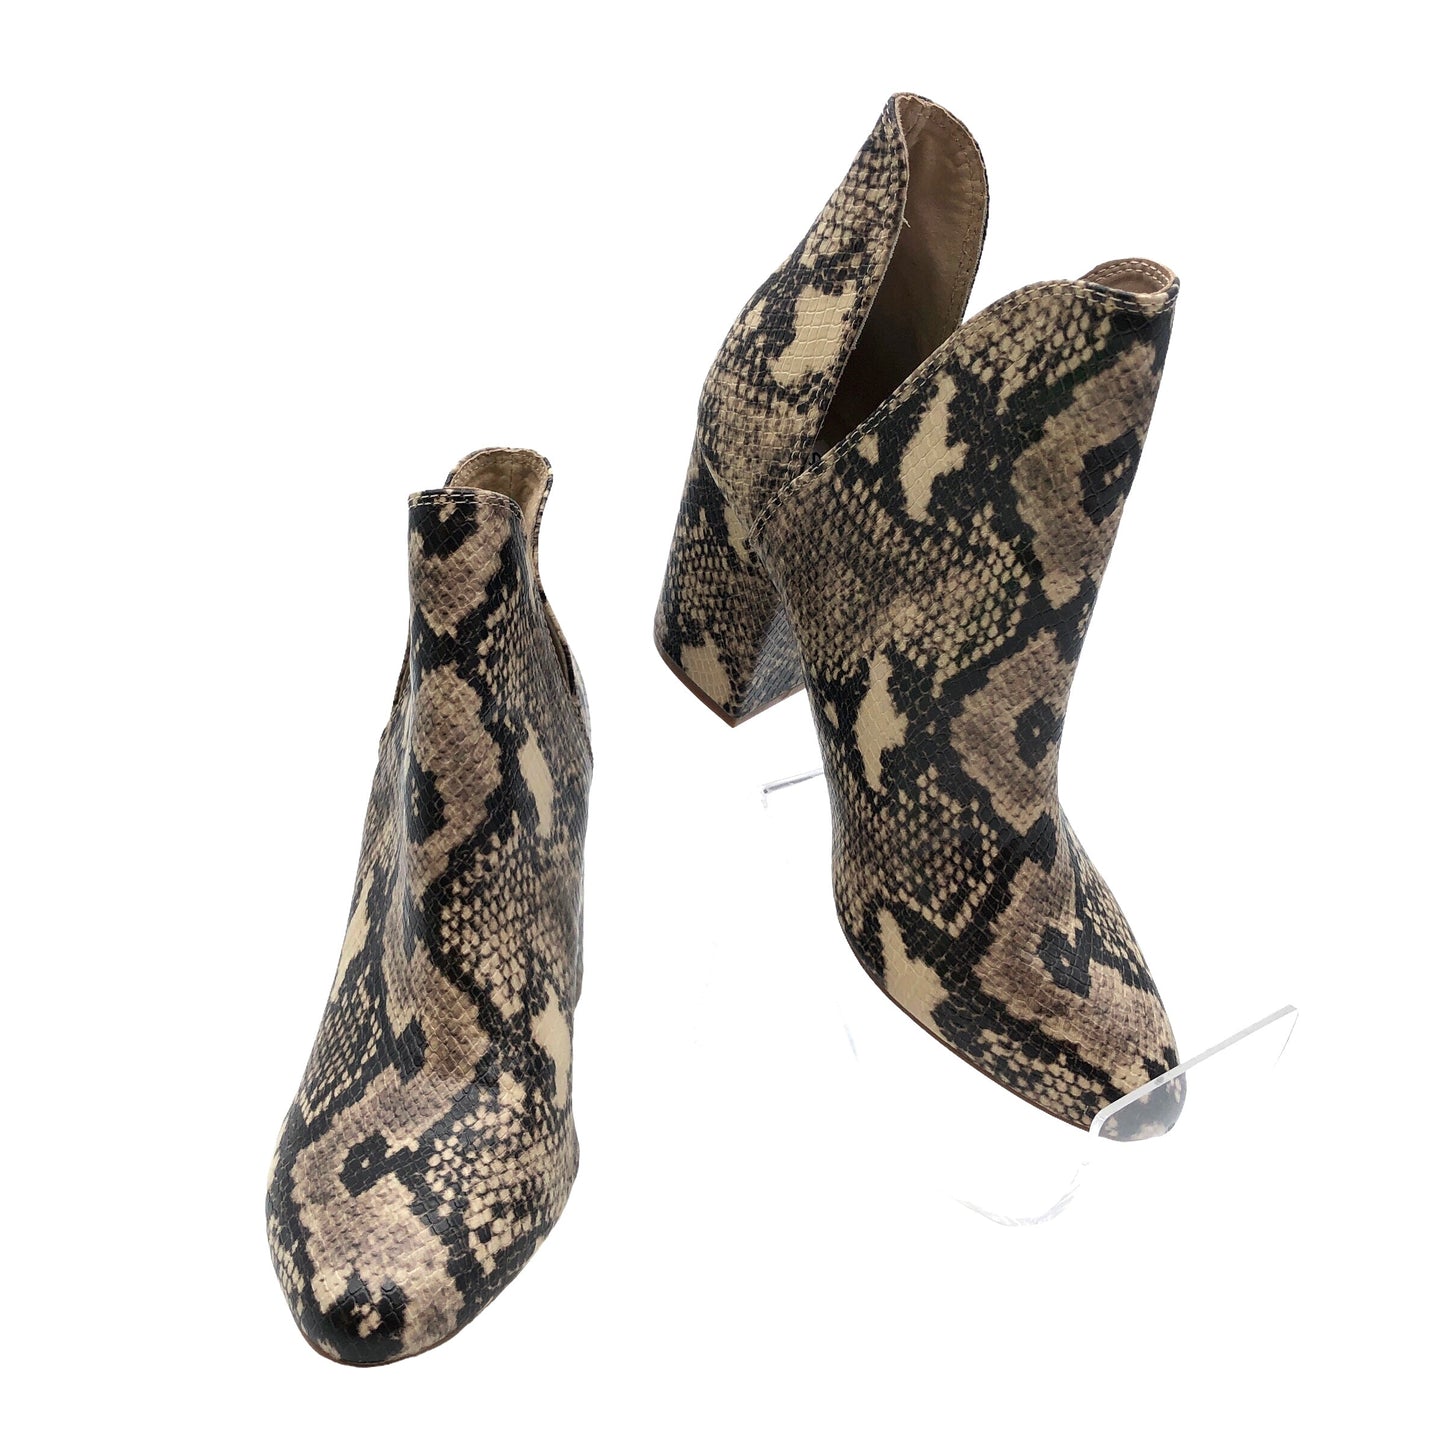 Snakeskin Print Boots Ankle Heels Steve Madden, Size 7.5